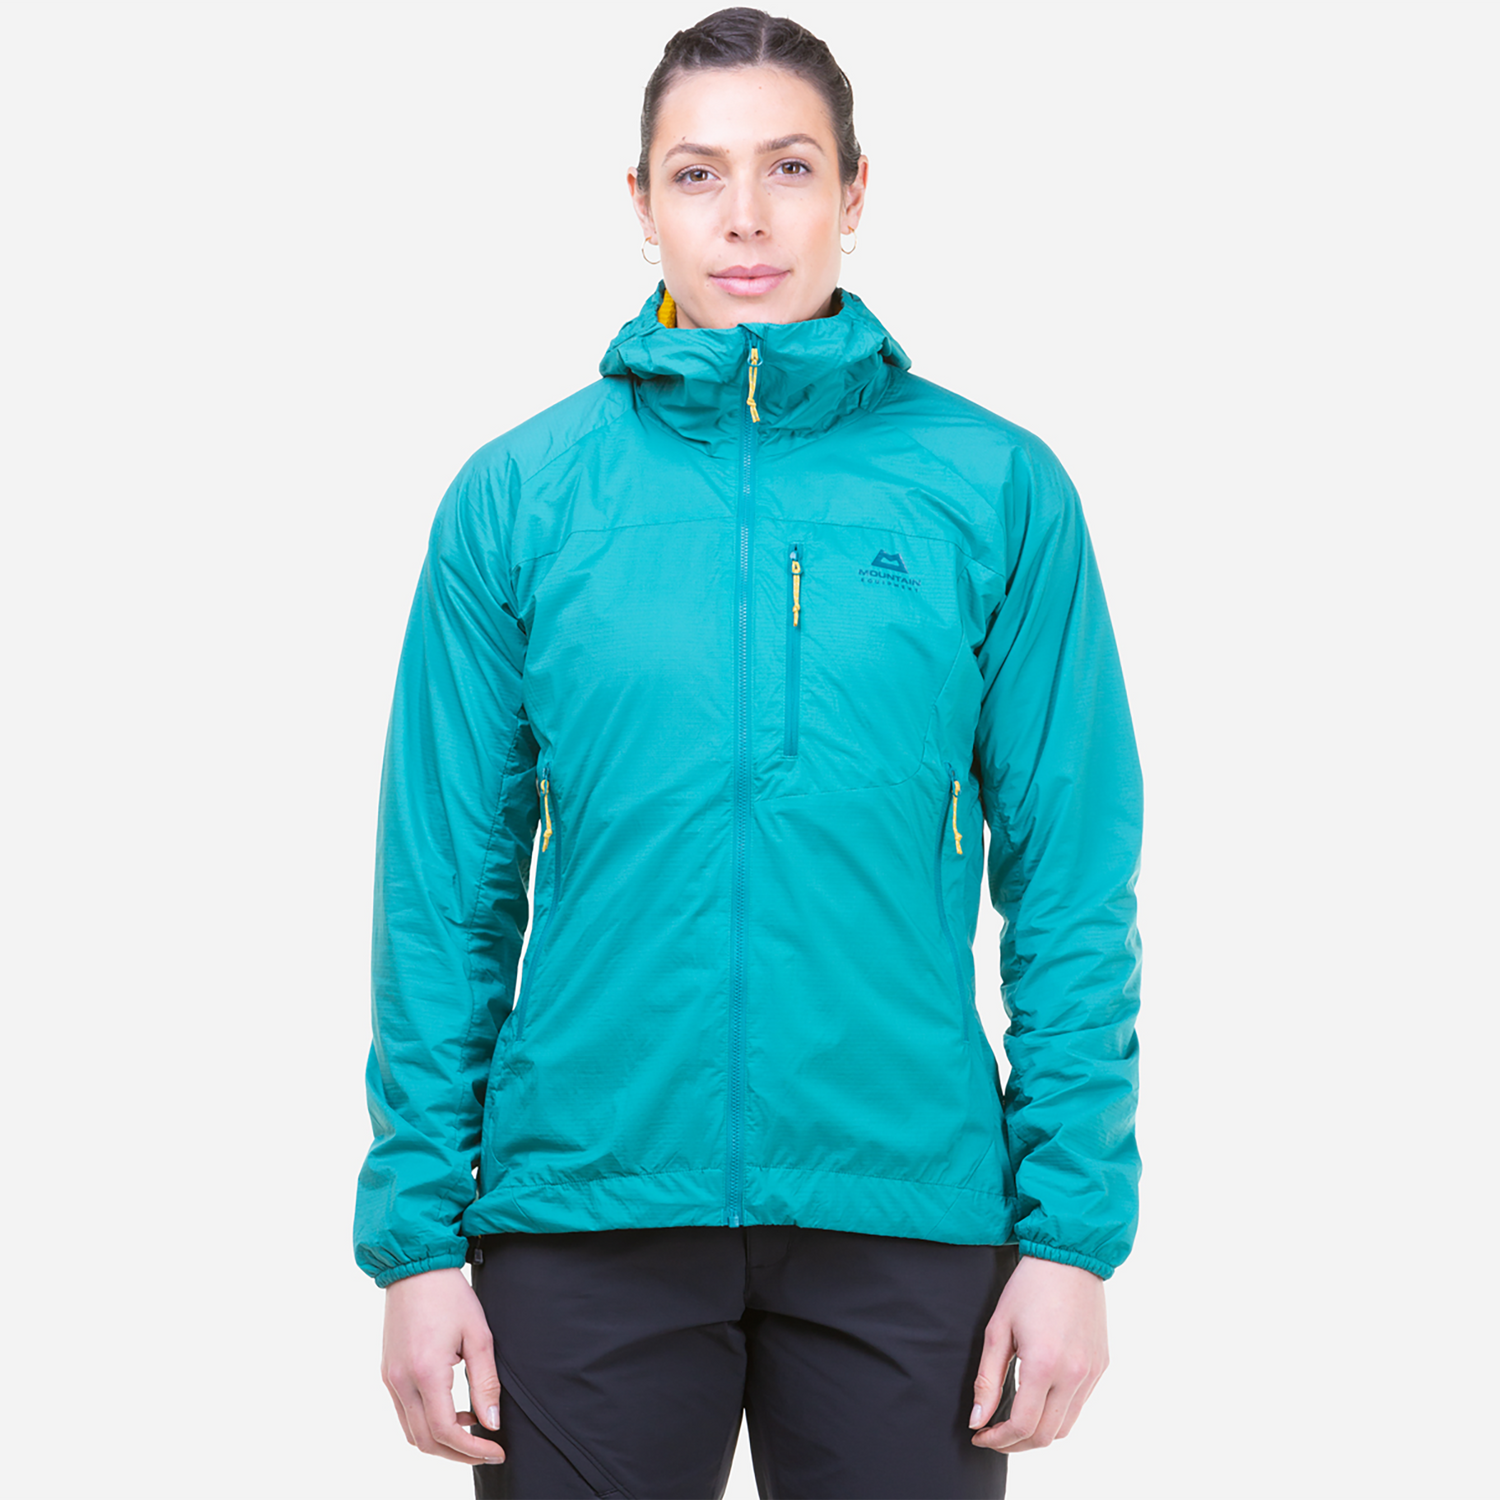 Aerotherm Women's Jacket | Mountain Equipment